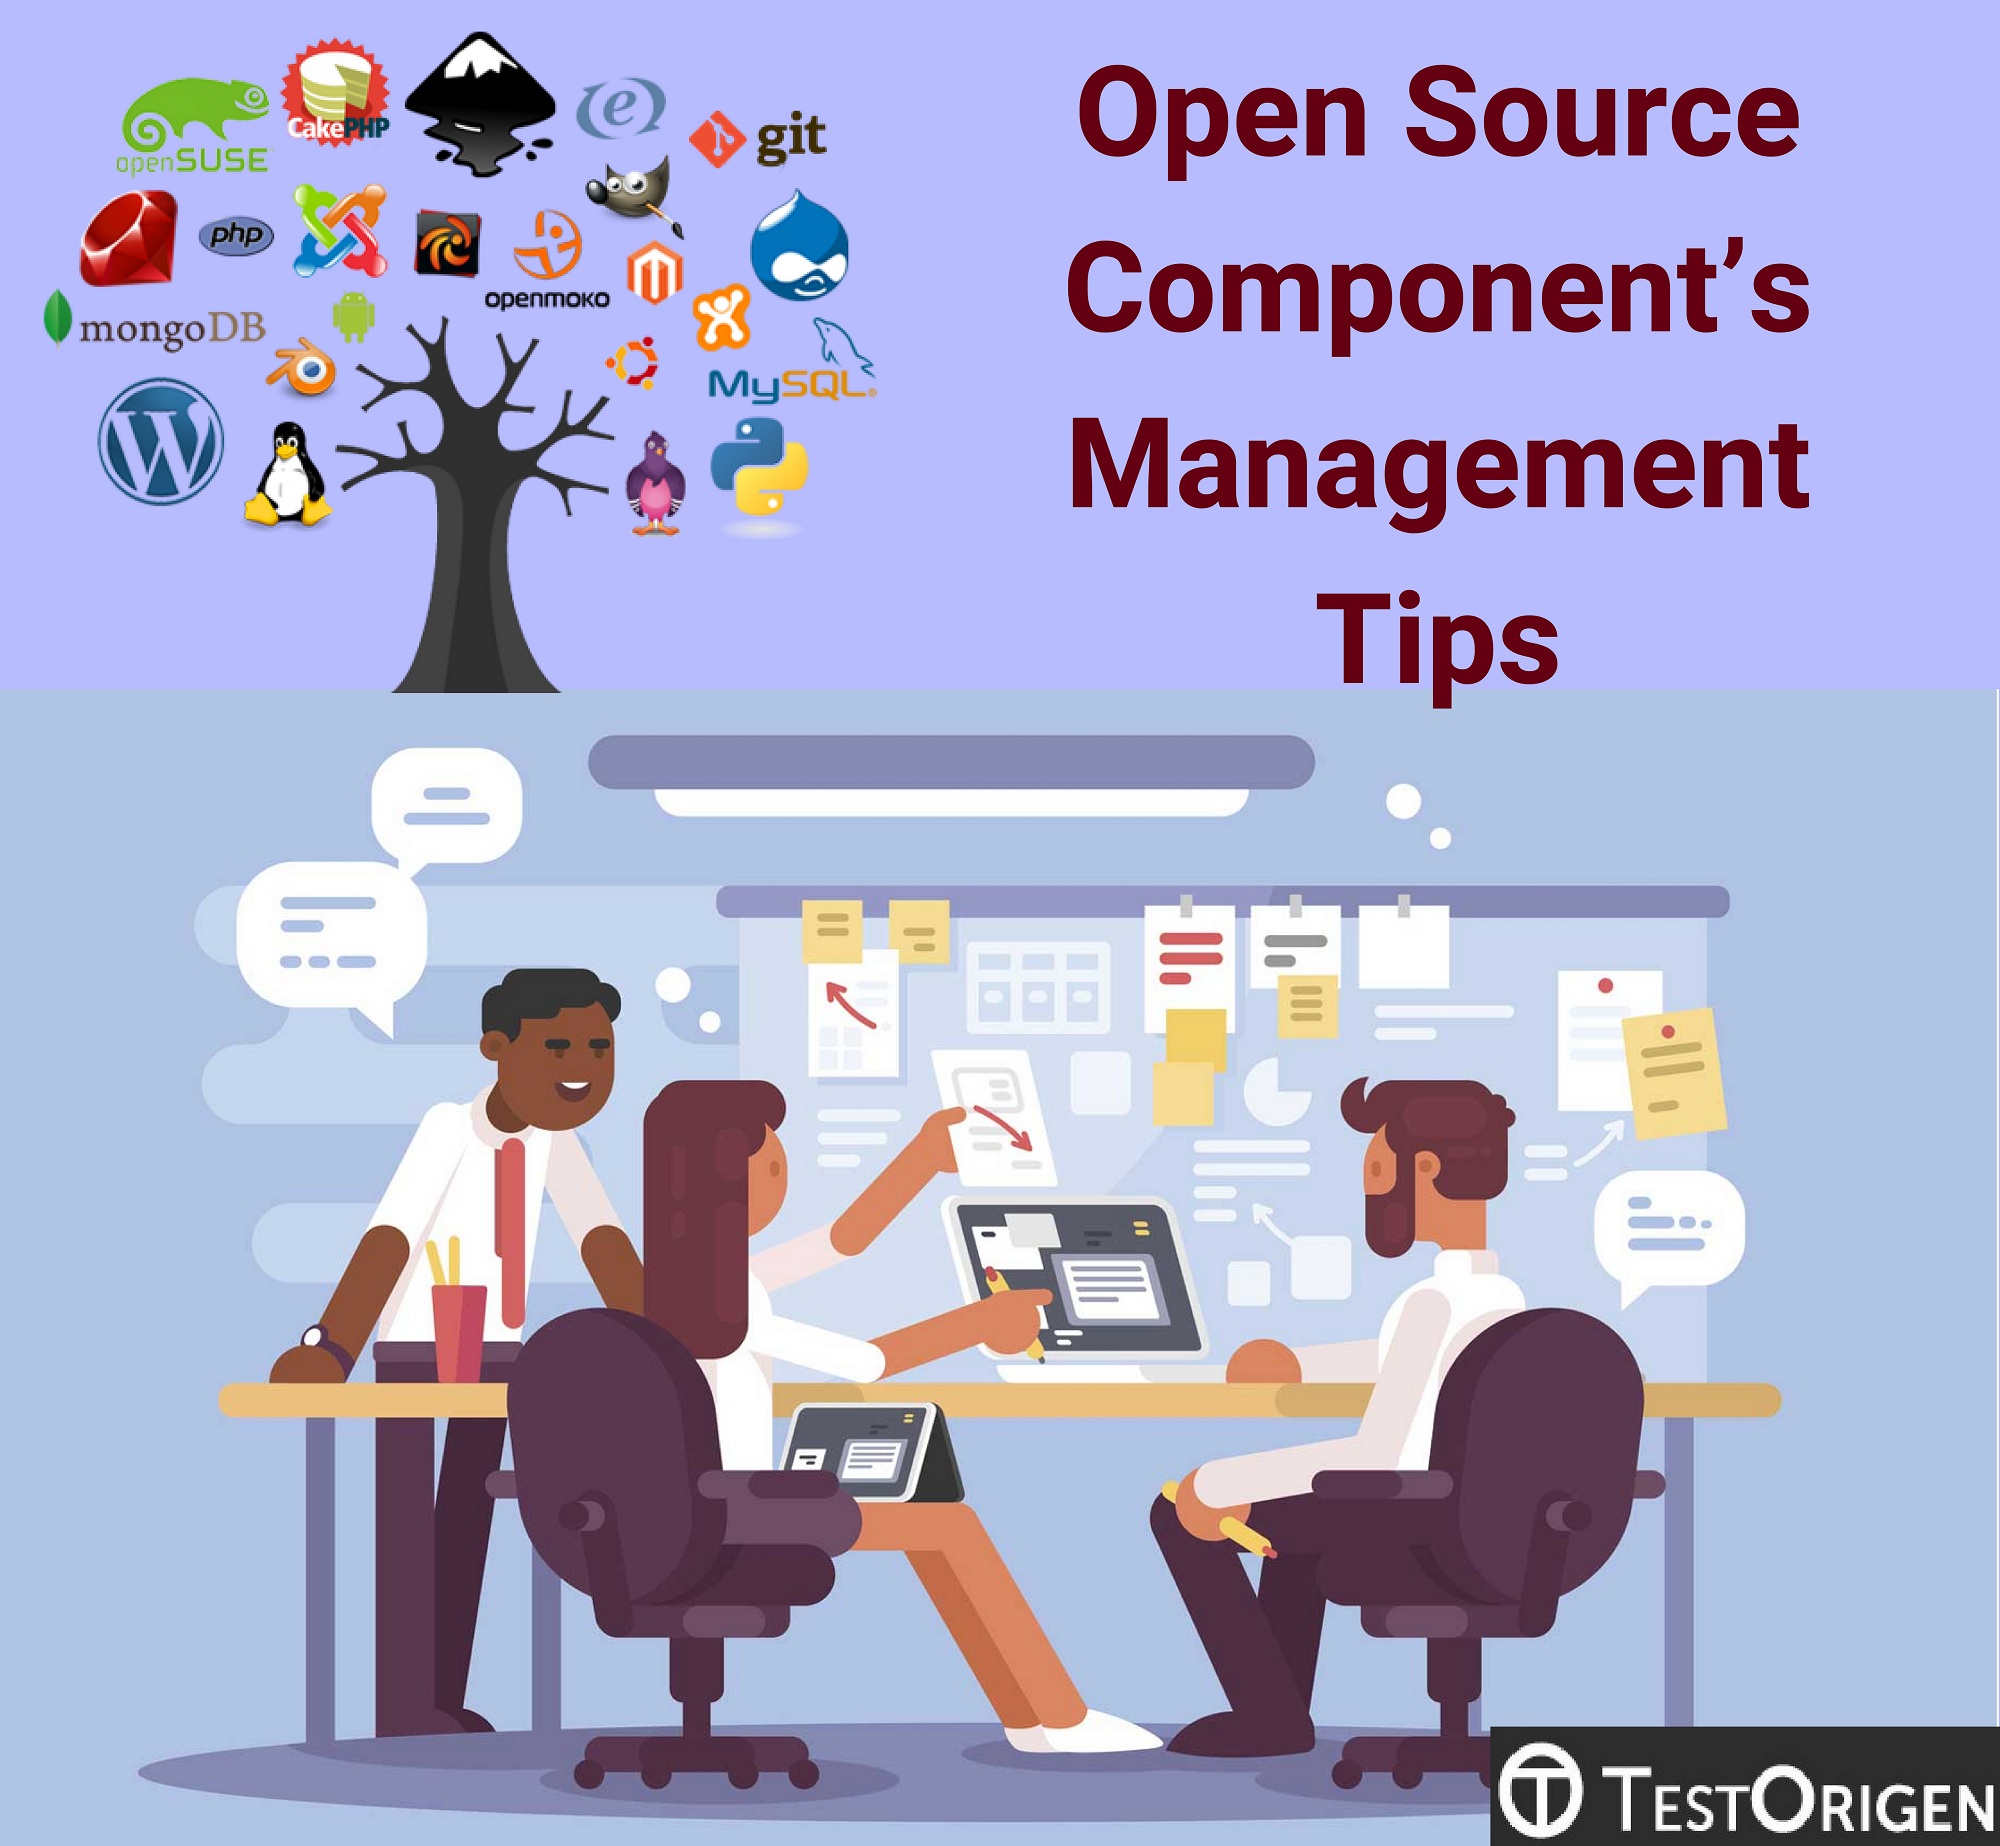 Open Source Component’s Management Tips